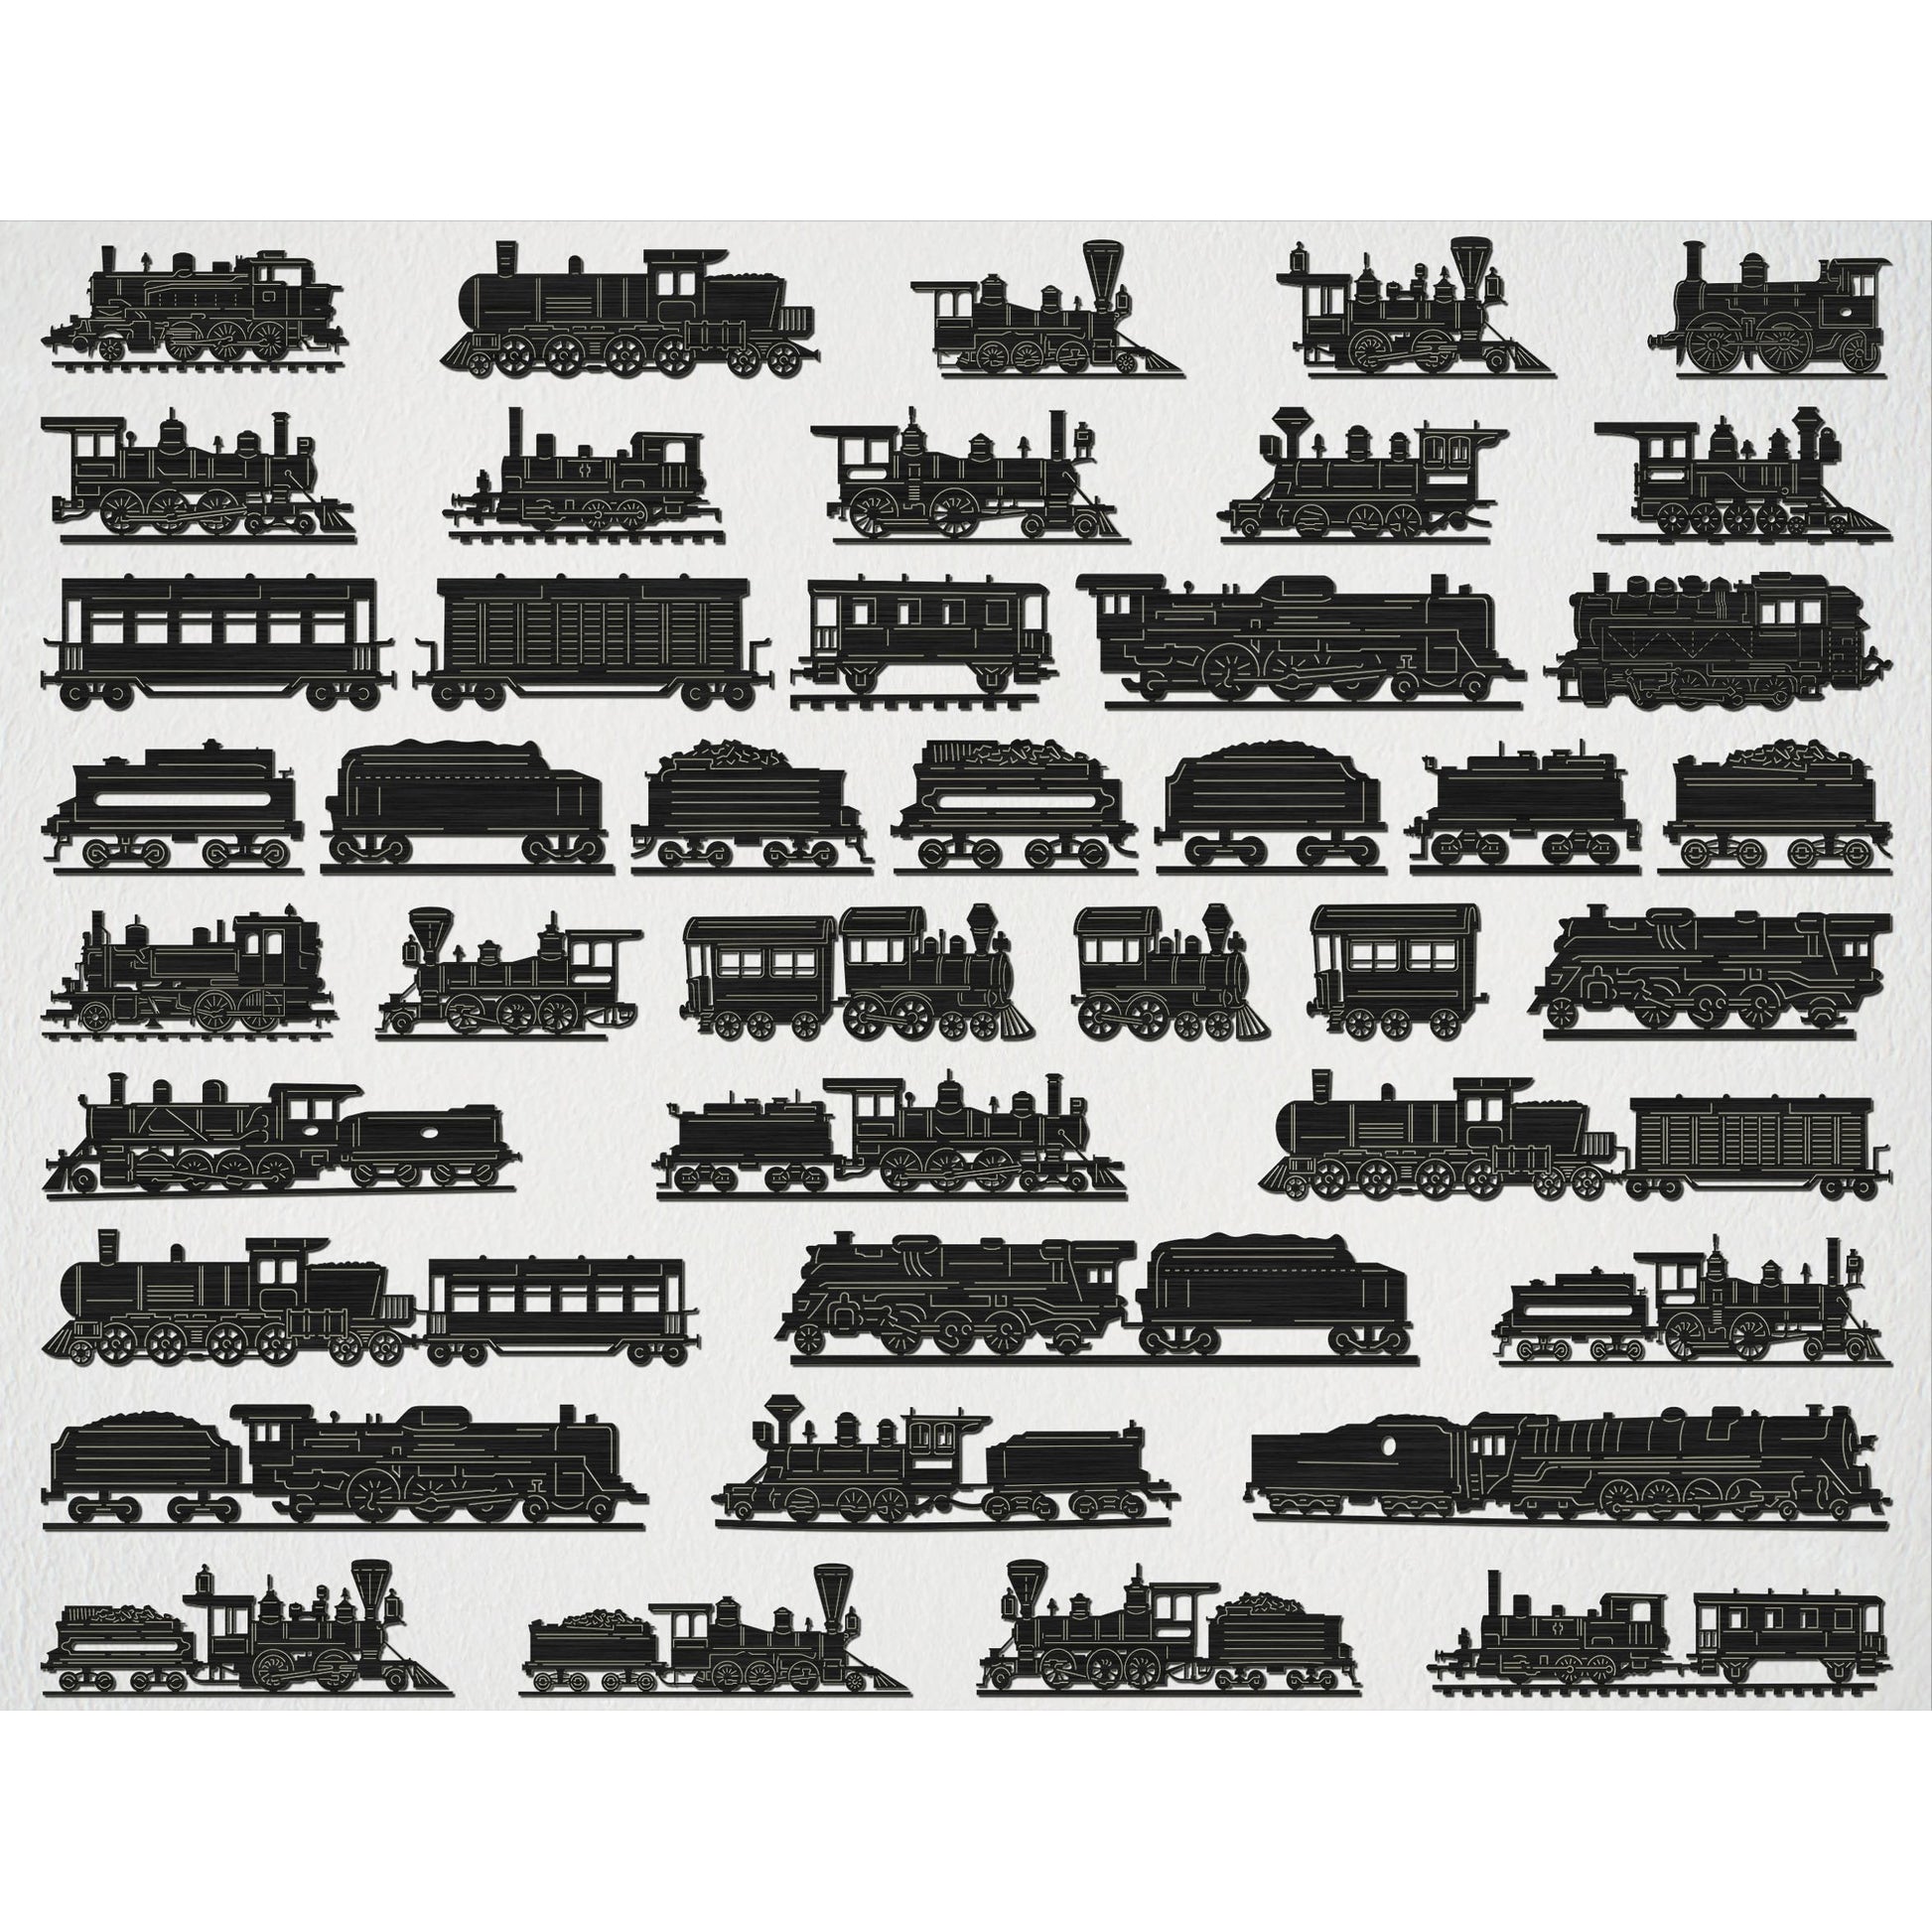 Antique Steam Locomotive Trains and Carts-DXFforCNC.com-DXF Files cut ready cnc machines